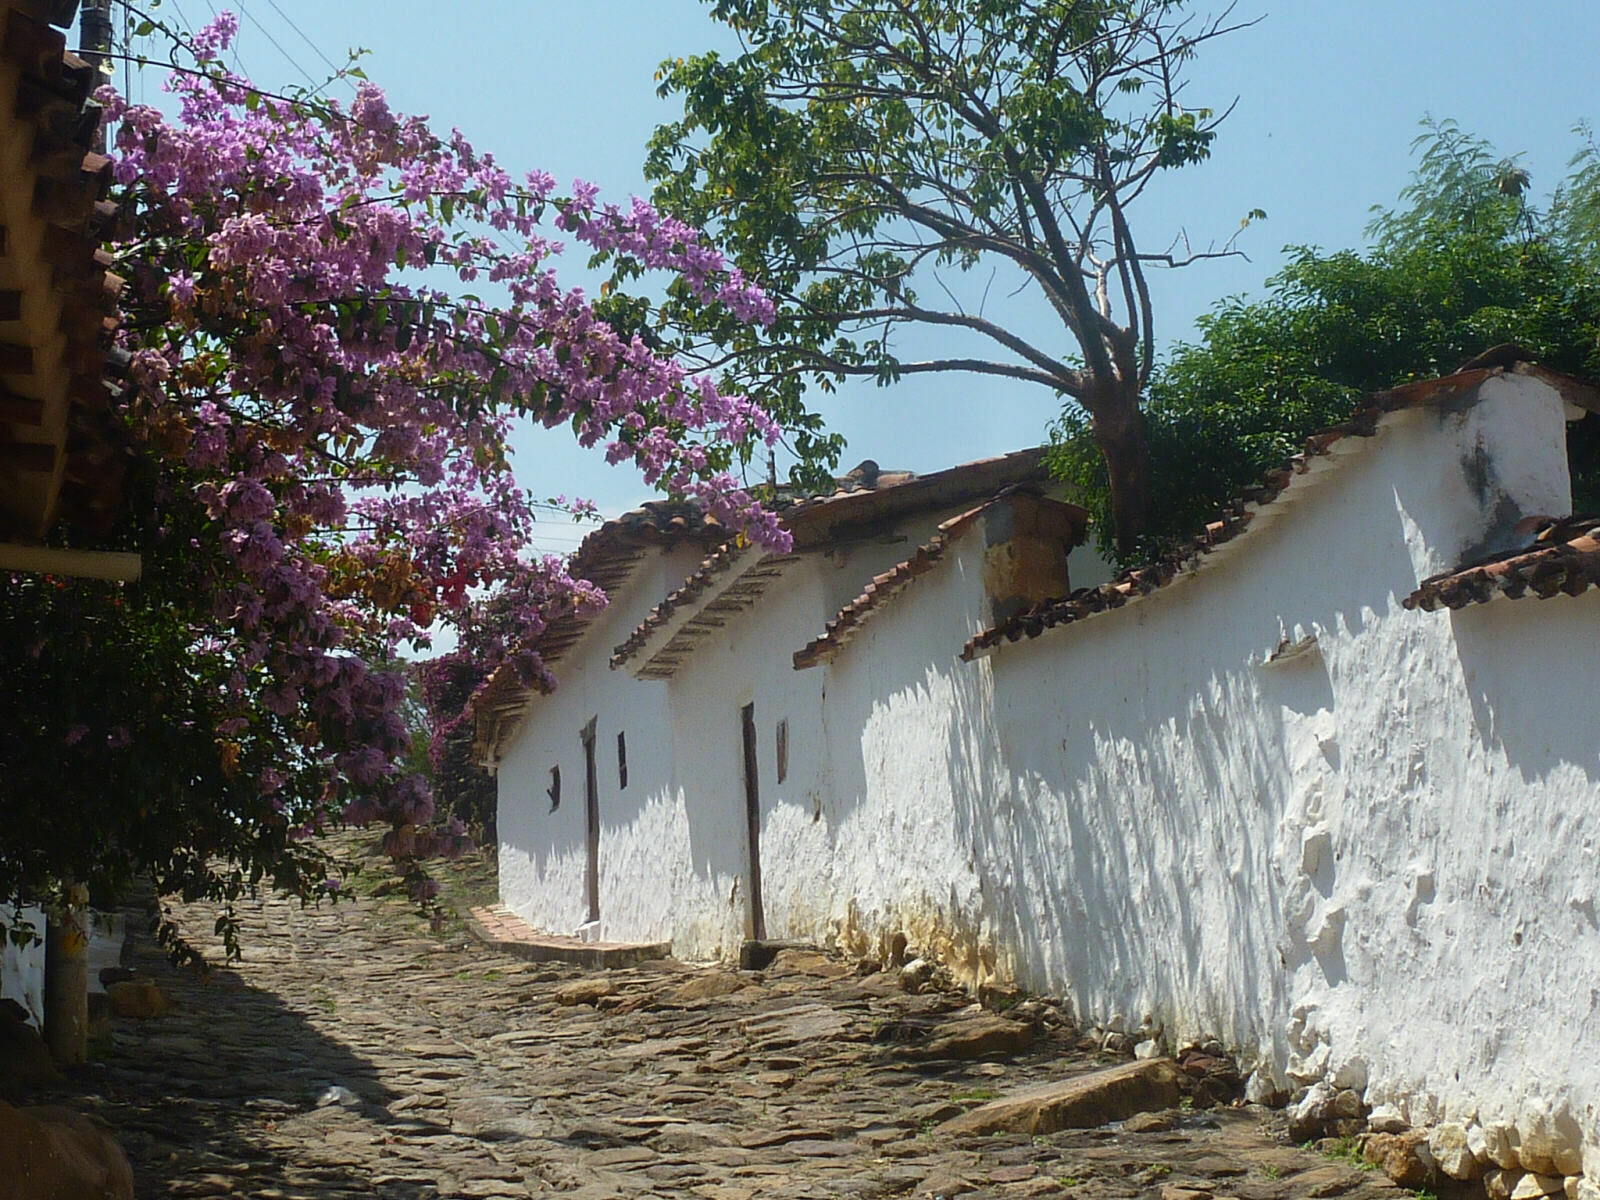 A street in Guane near Barichara, Colombia